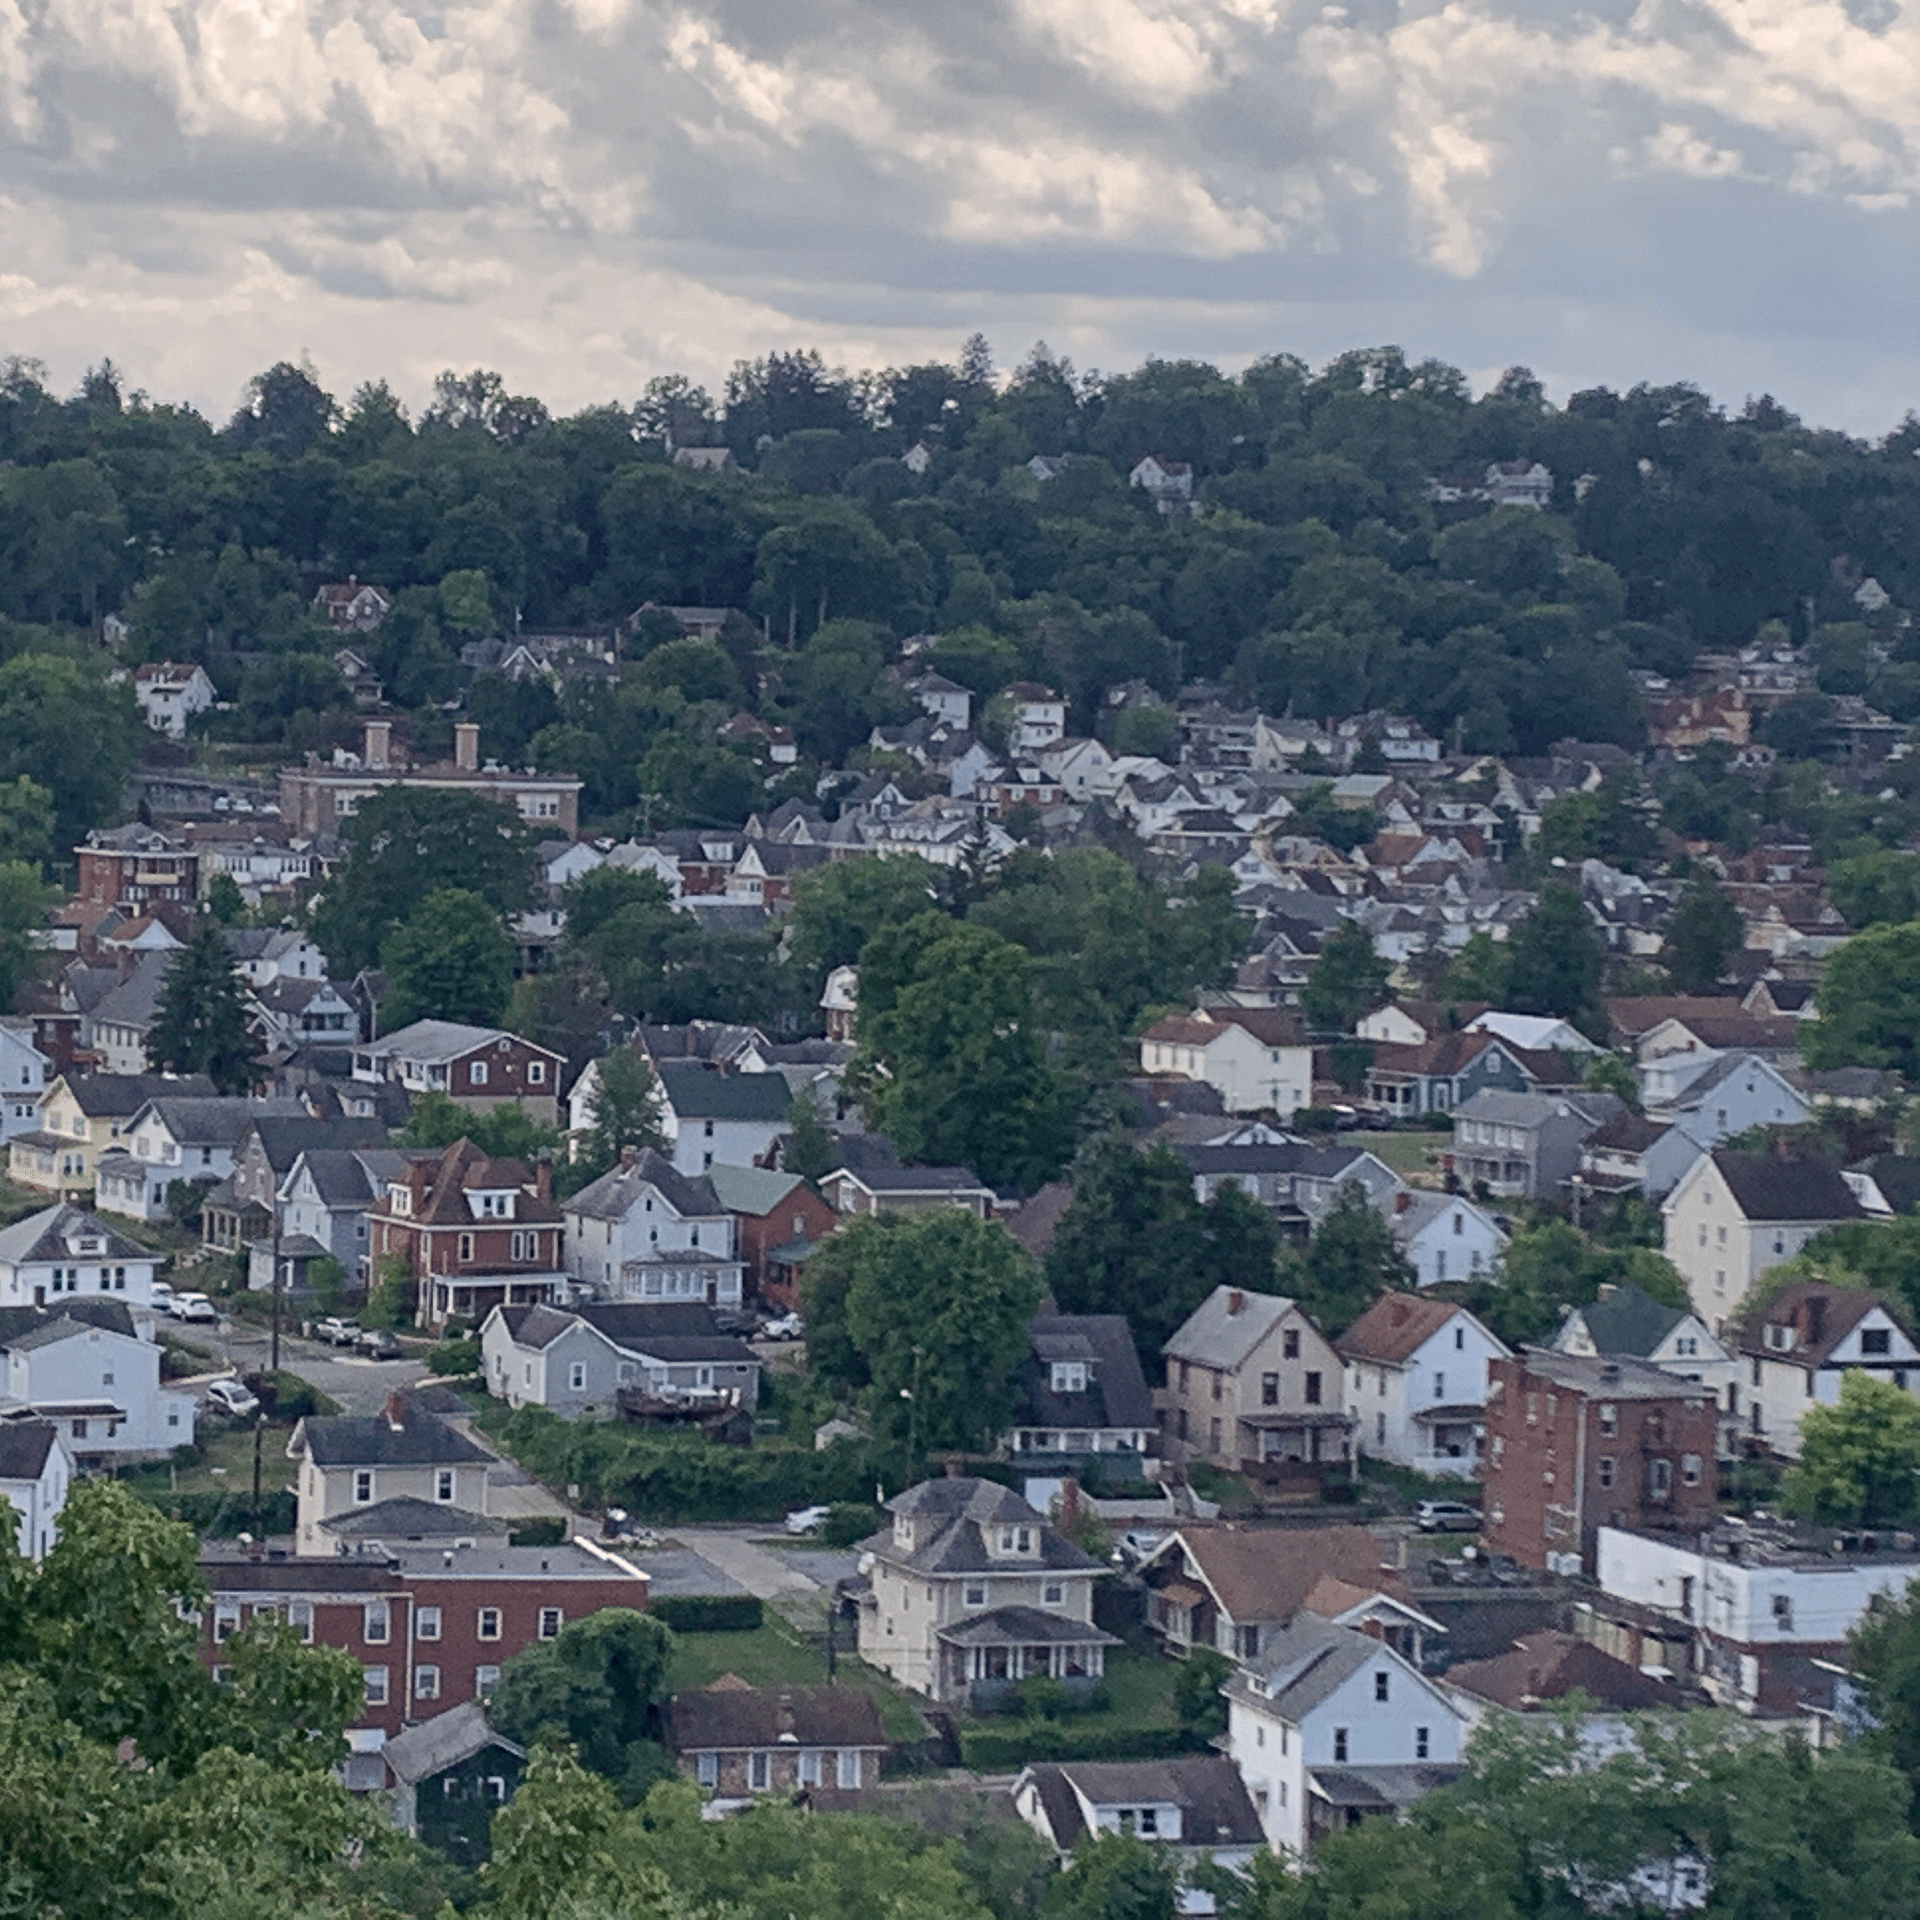 Street view of Greenmont